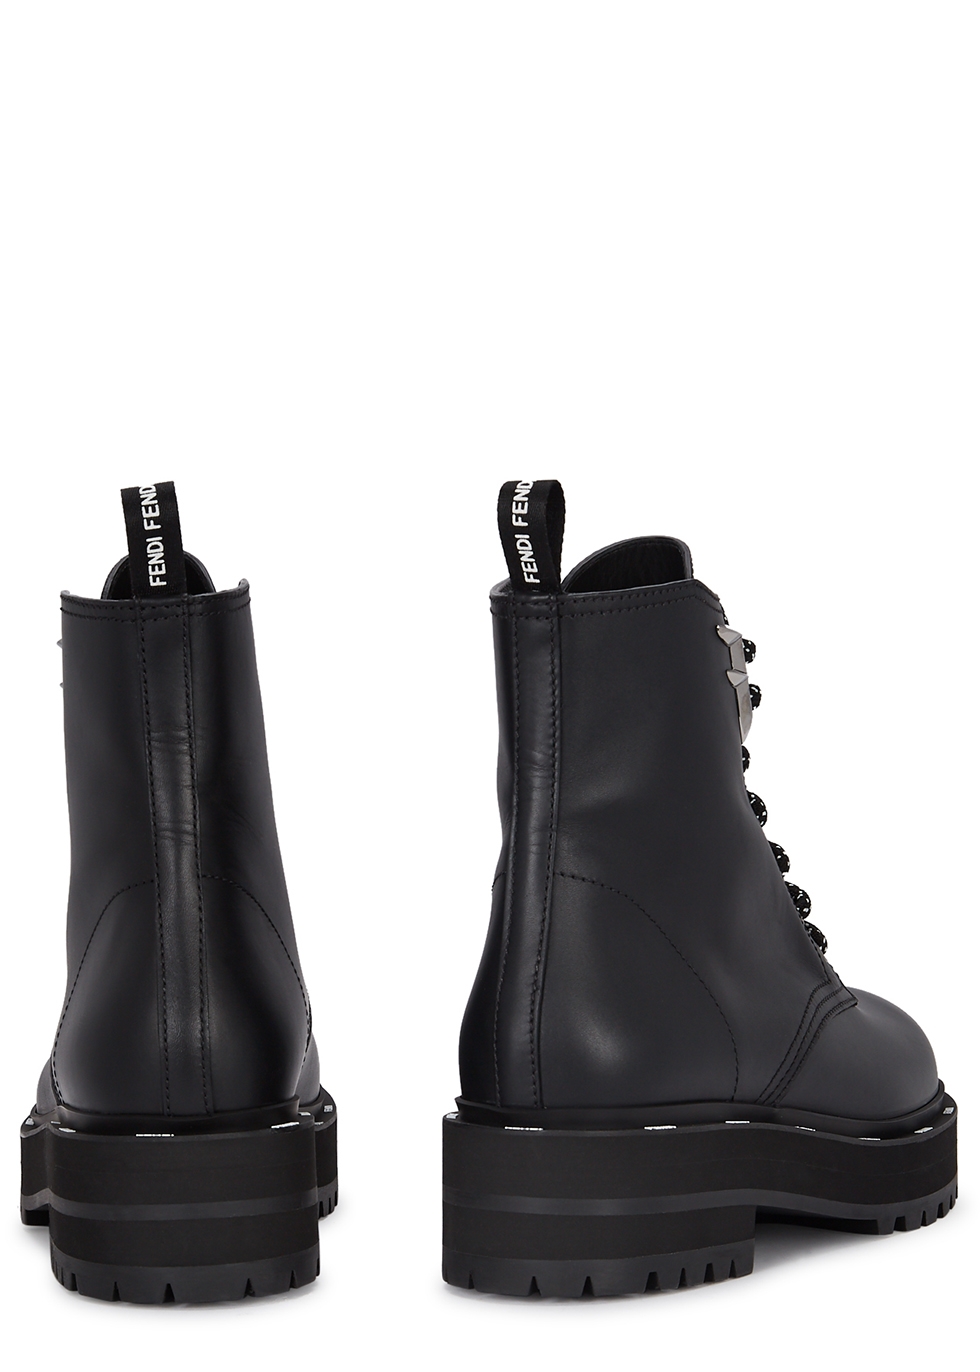 leather black biker boots